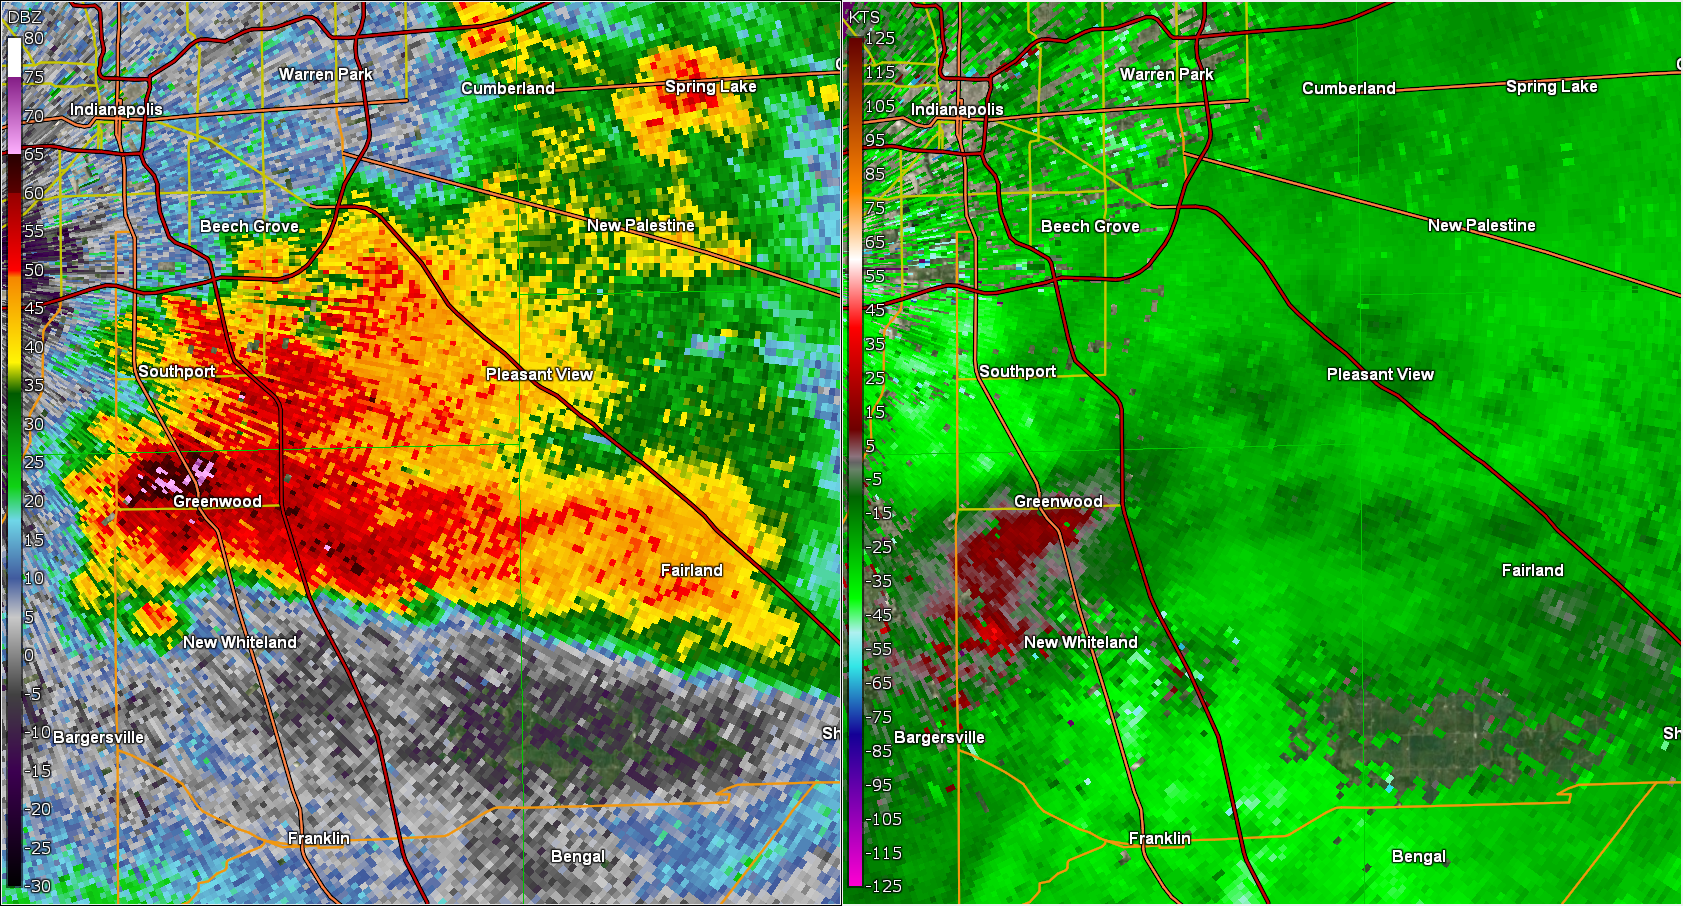 Radar image of Johnson Co Storm